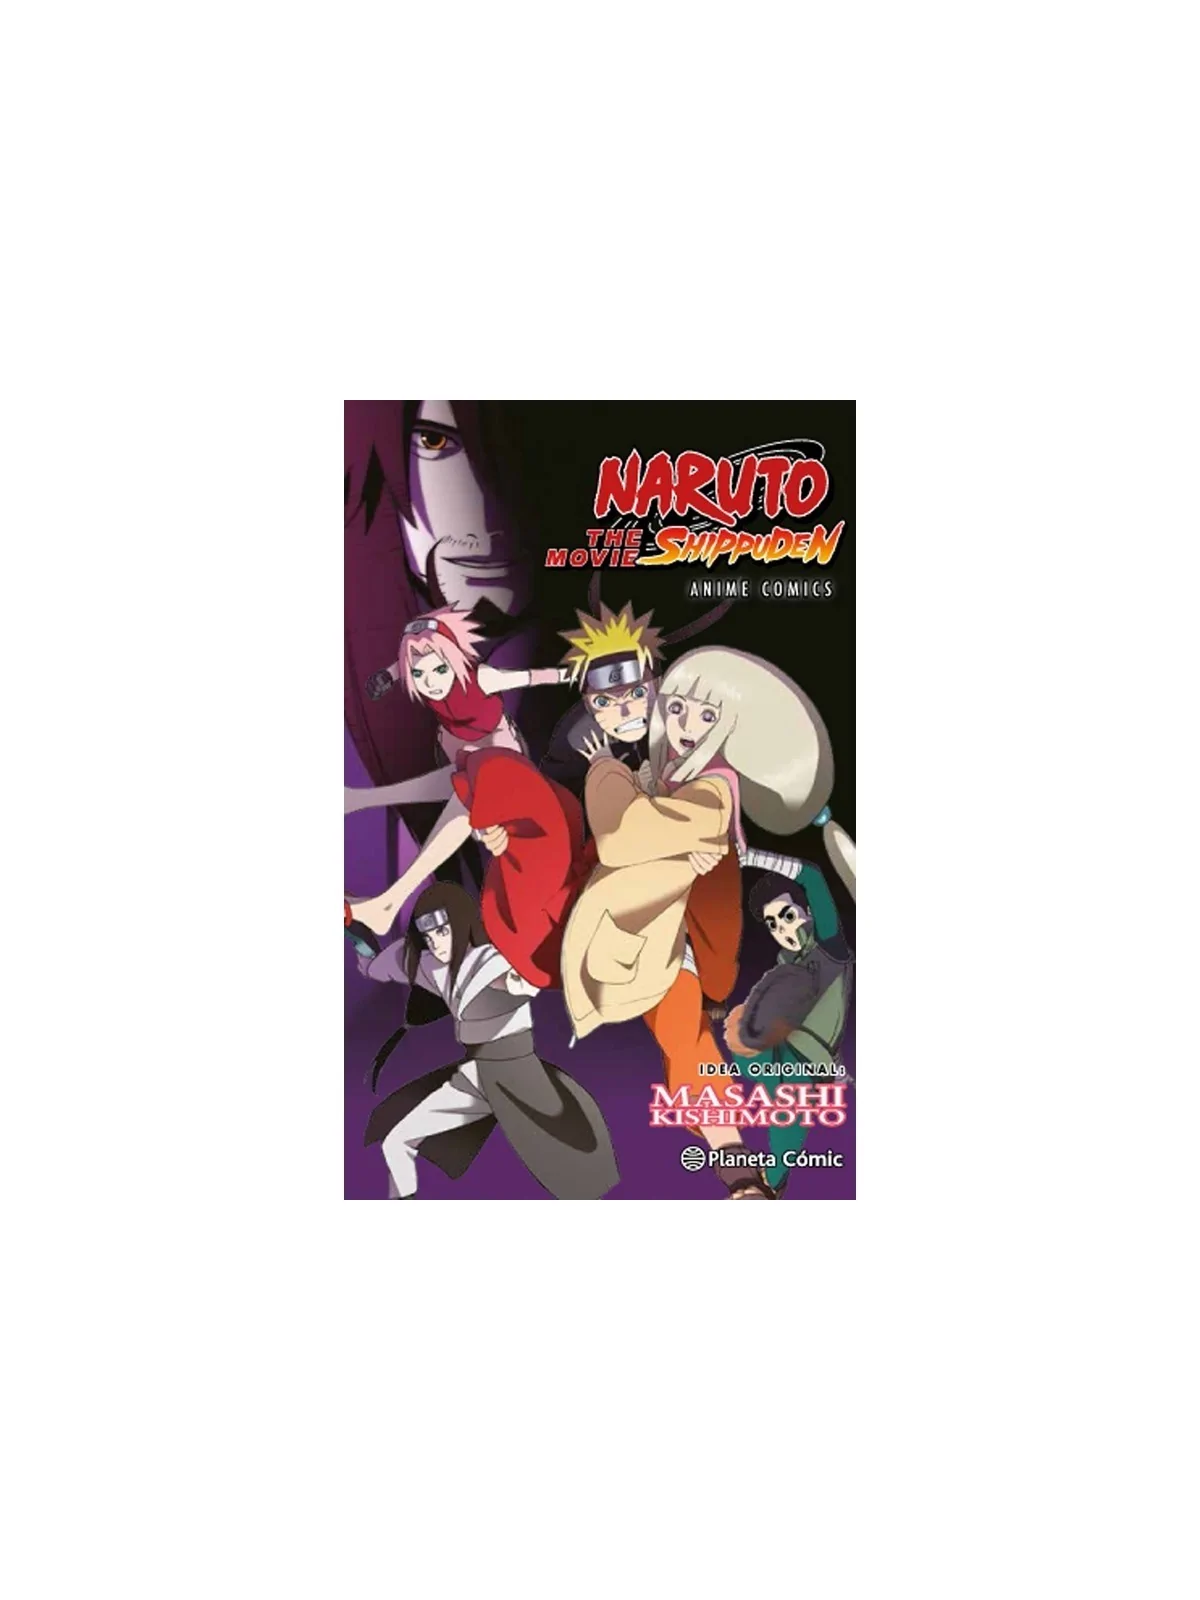 Comprar Naruto Shippuden Anime Comic The Movie barato al mejor precio 